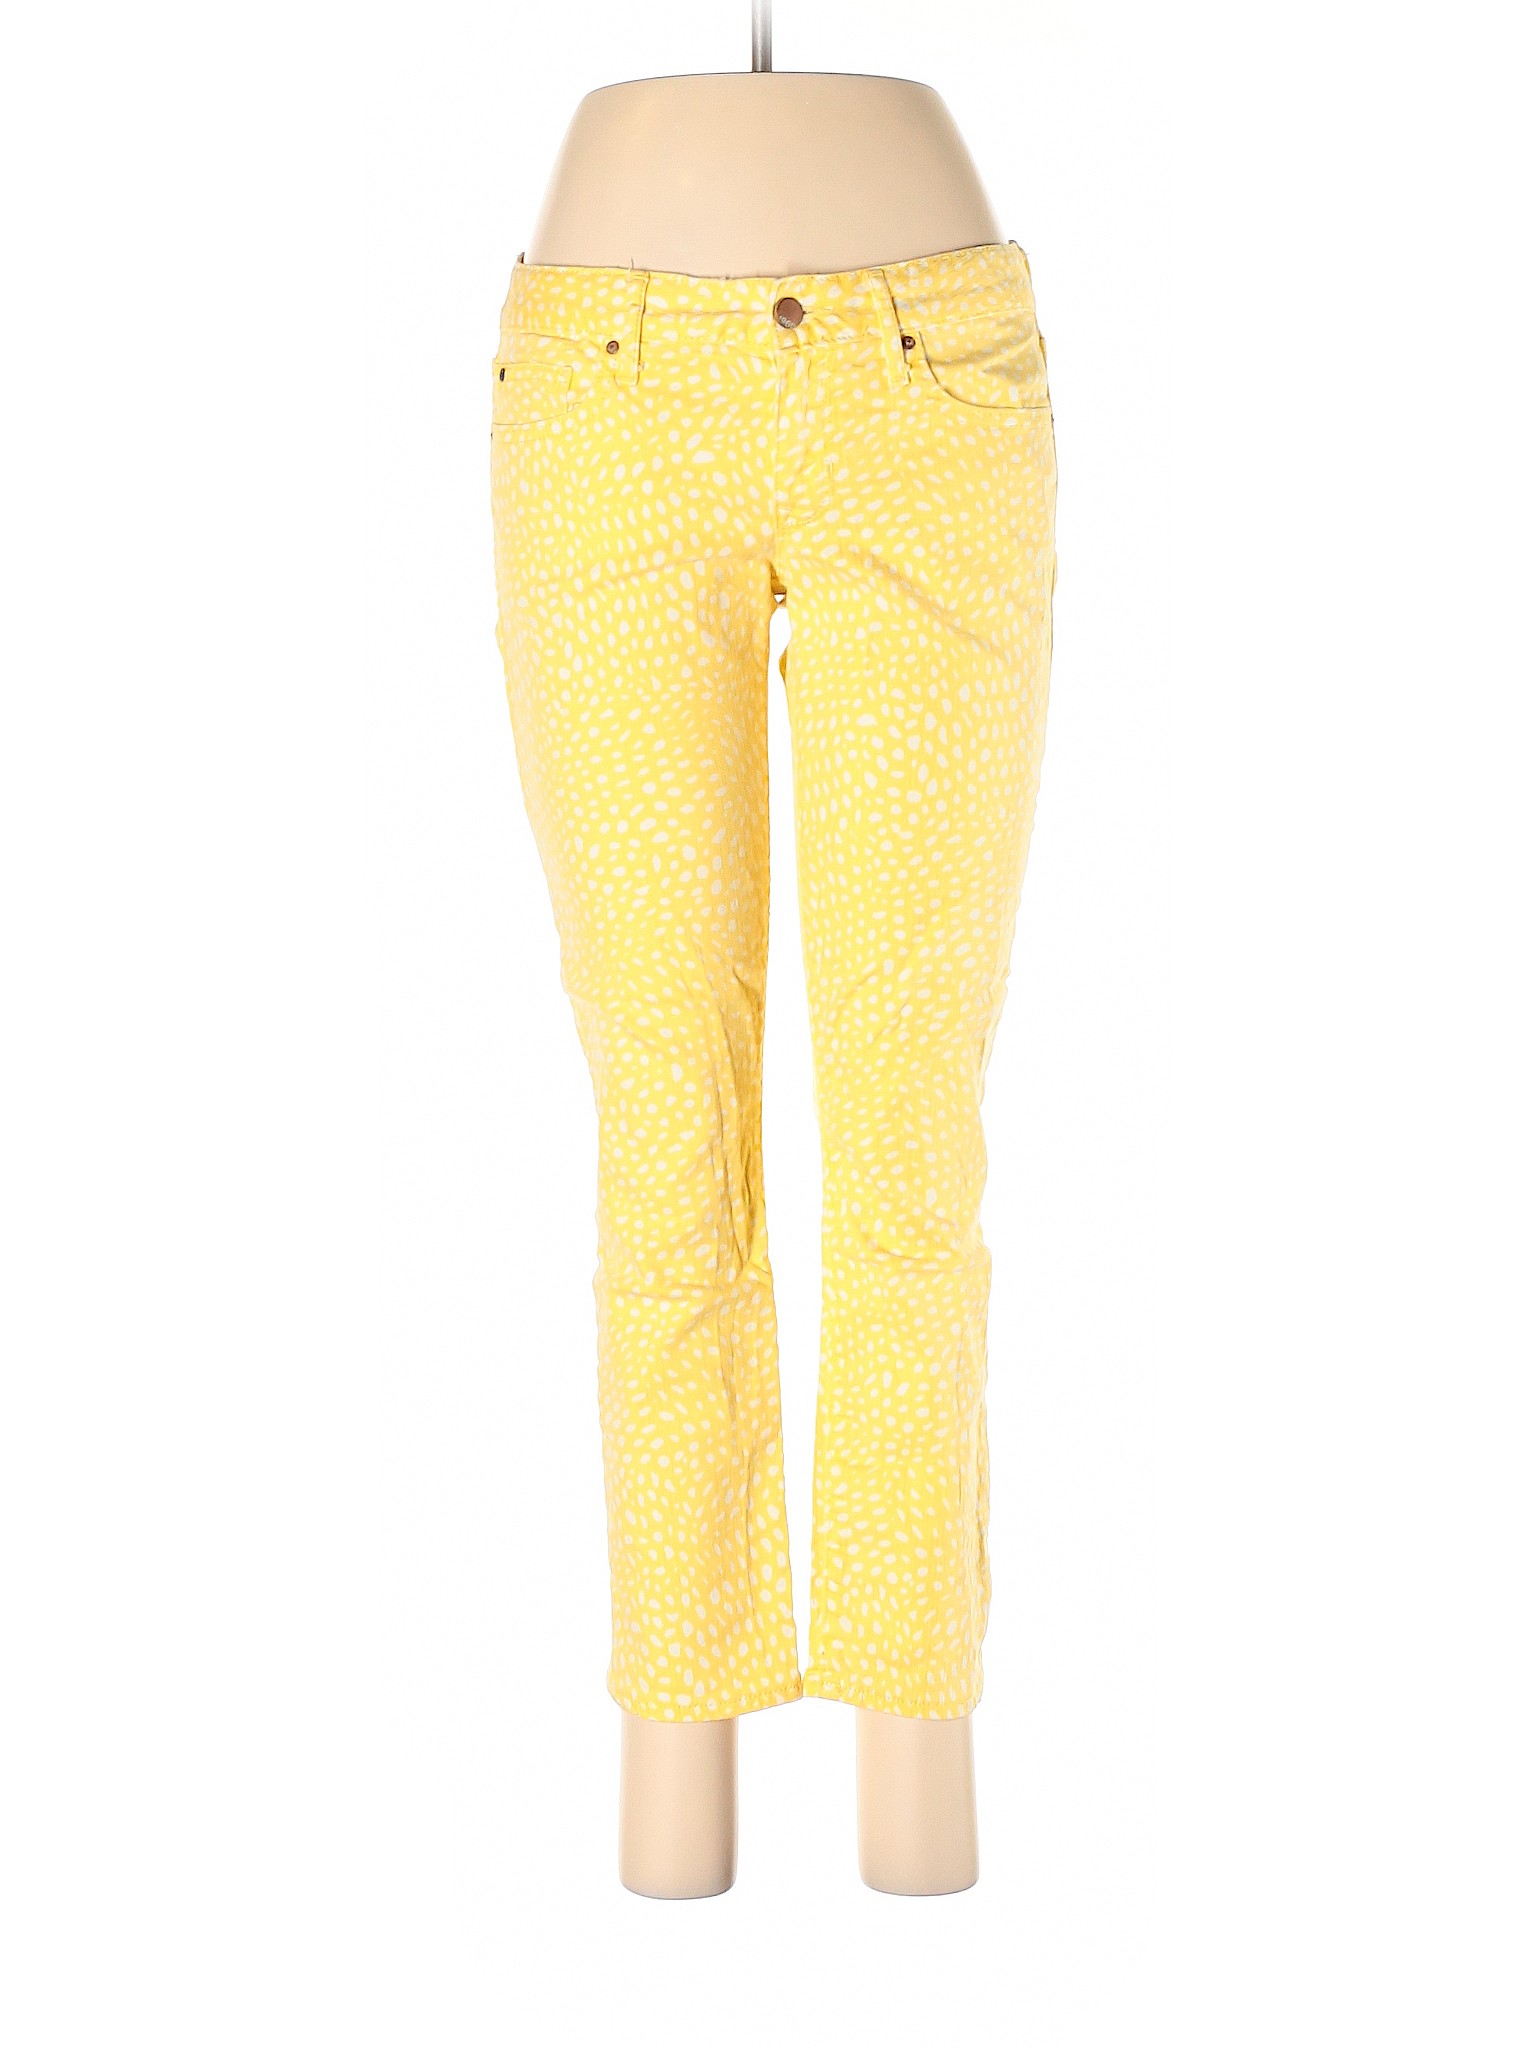 Gap Women Yellow Jeans 28 W Petites | eBay